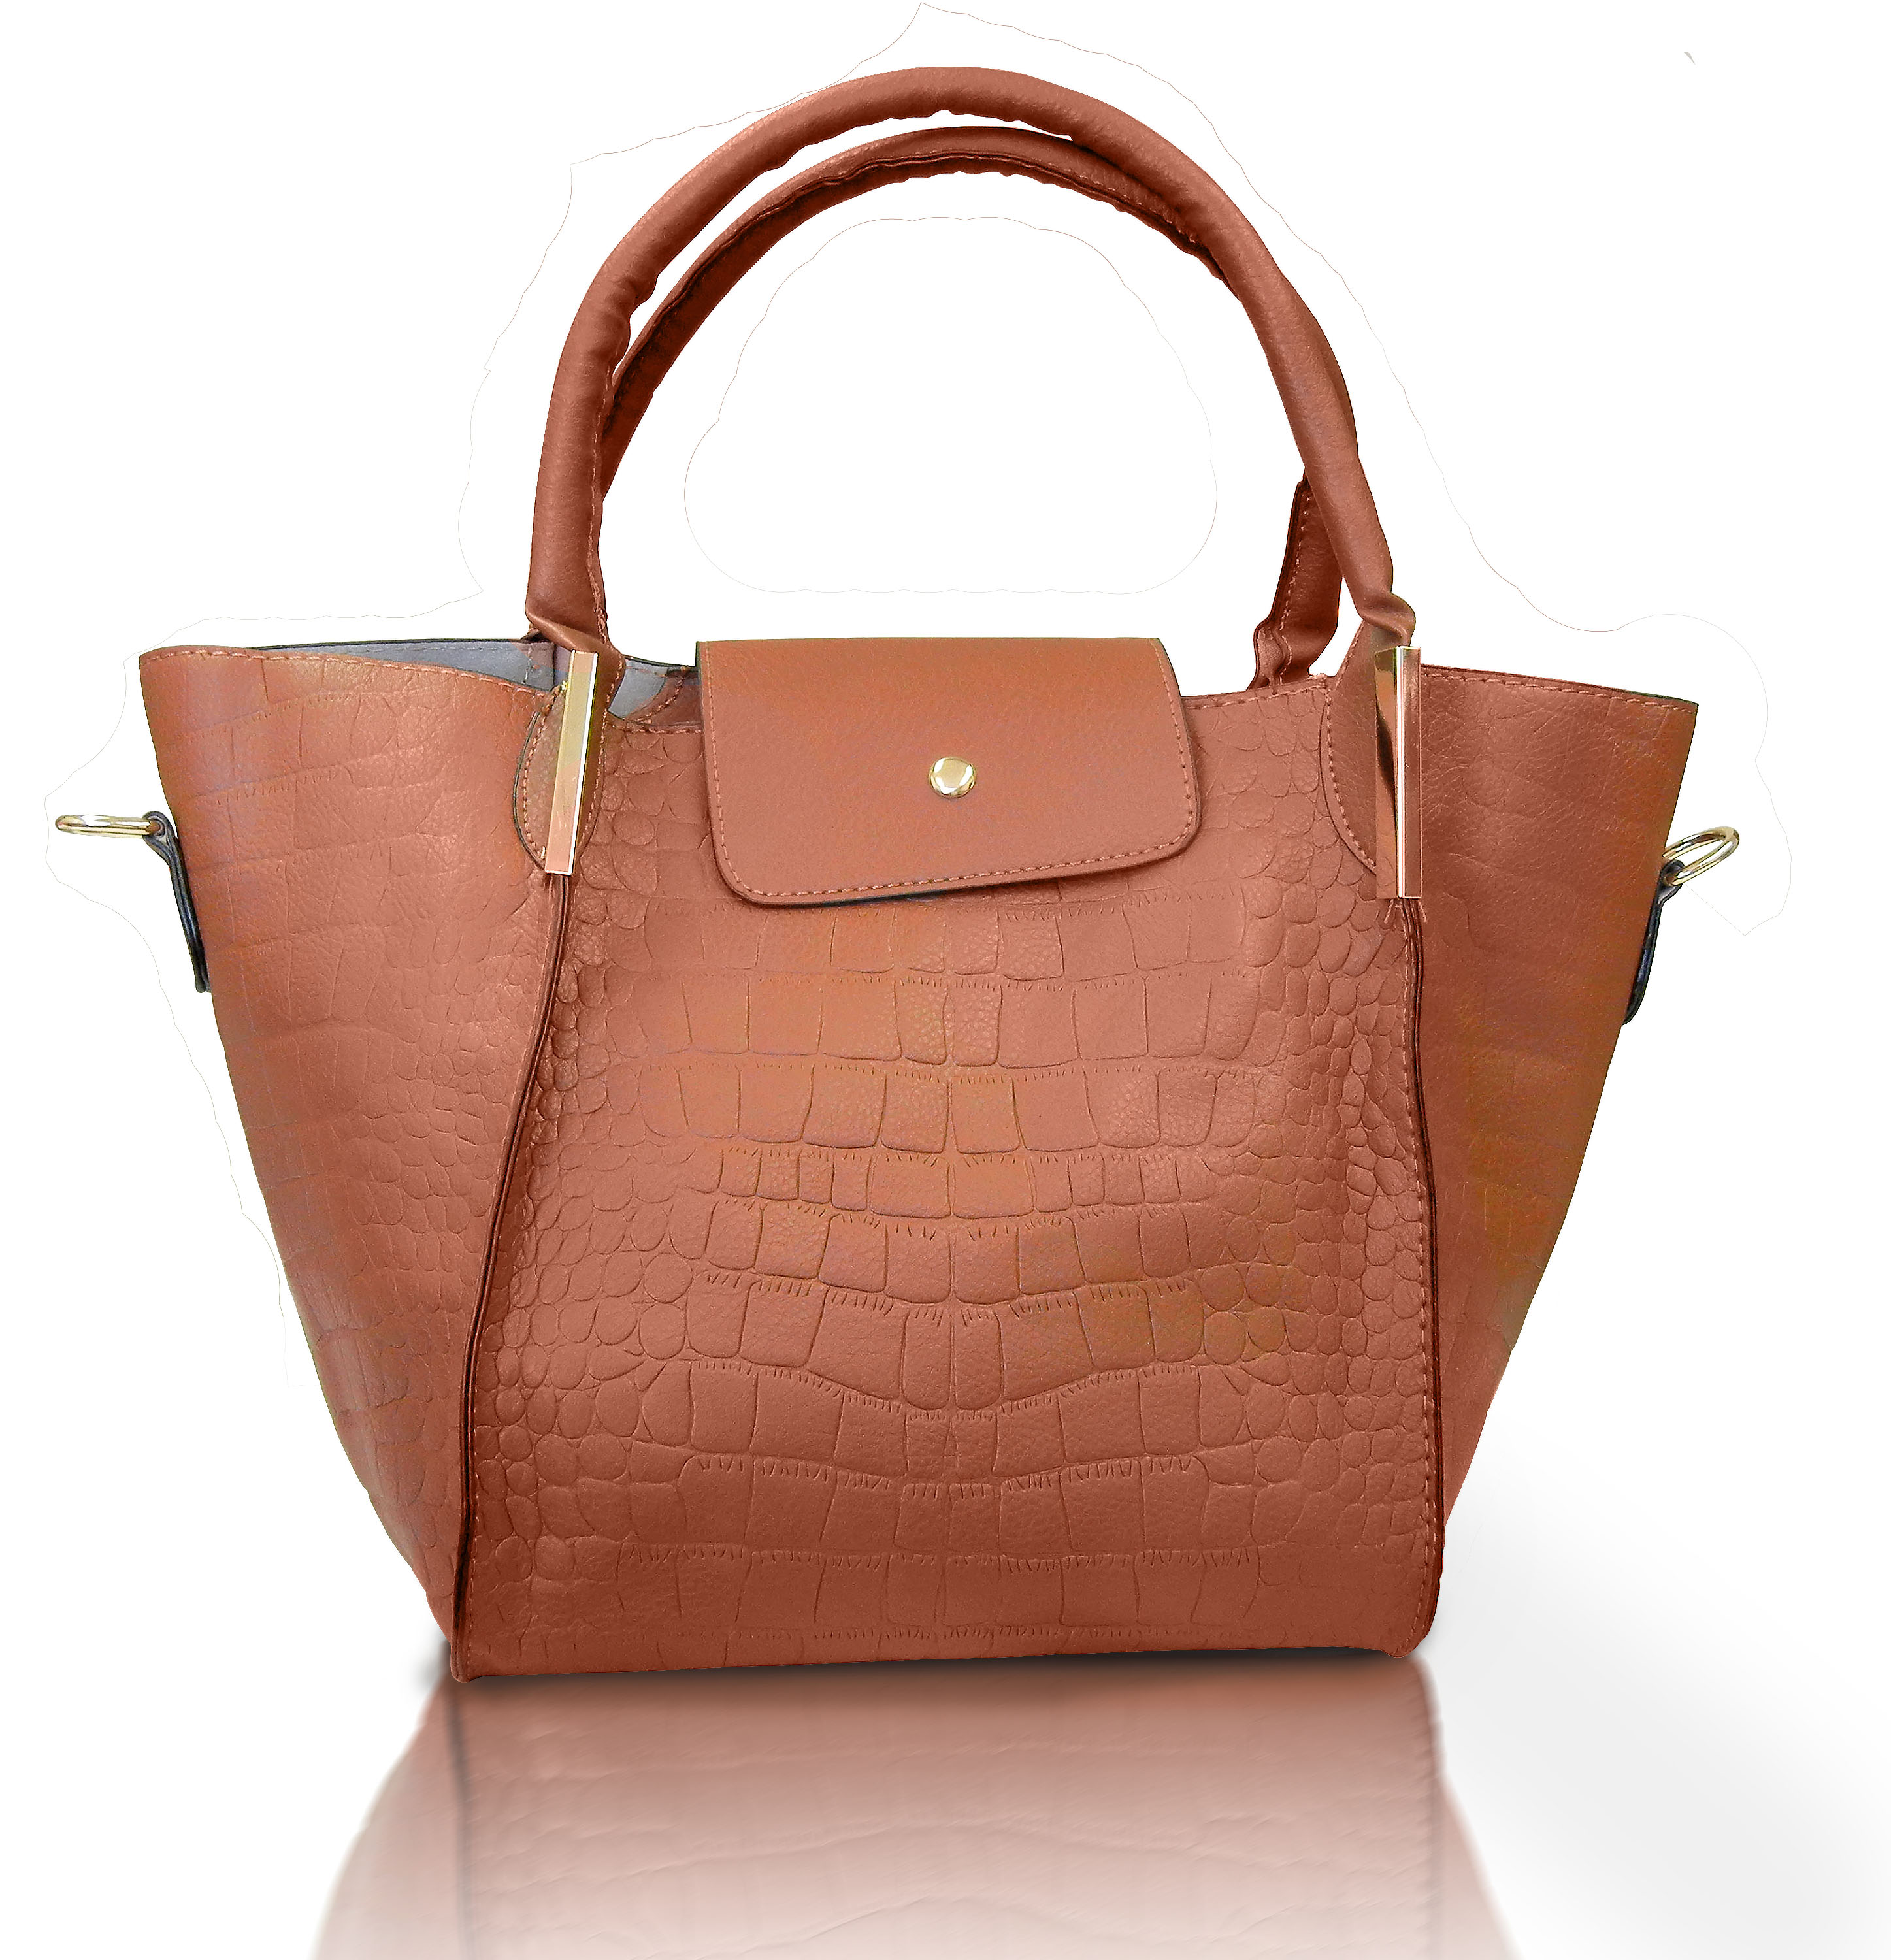 Coffee / Tan color Ladies Handbag with removable straps, satchel bag,with small companion bag,wallet,